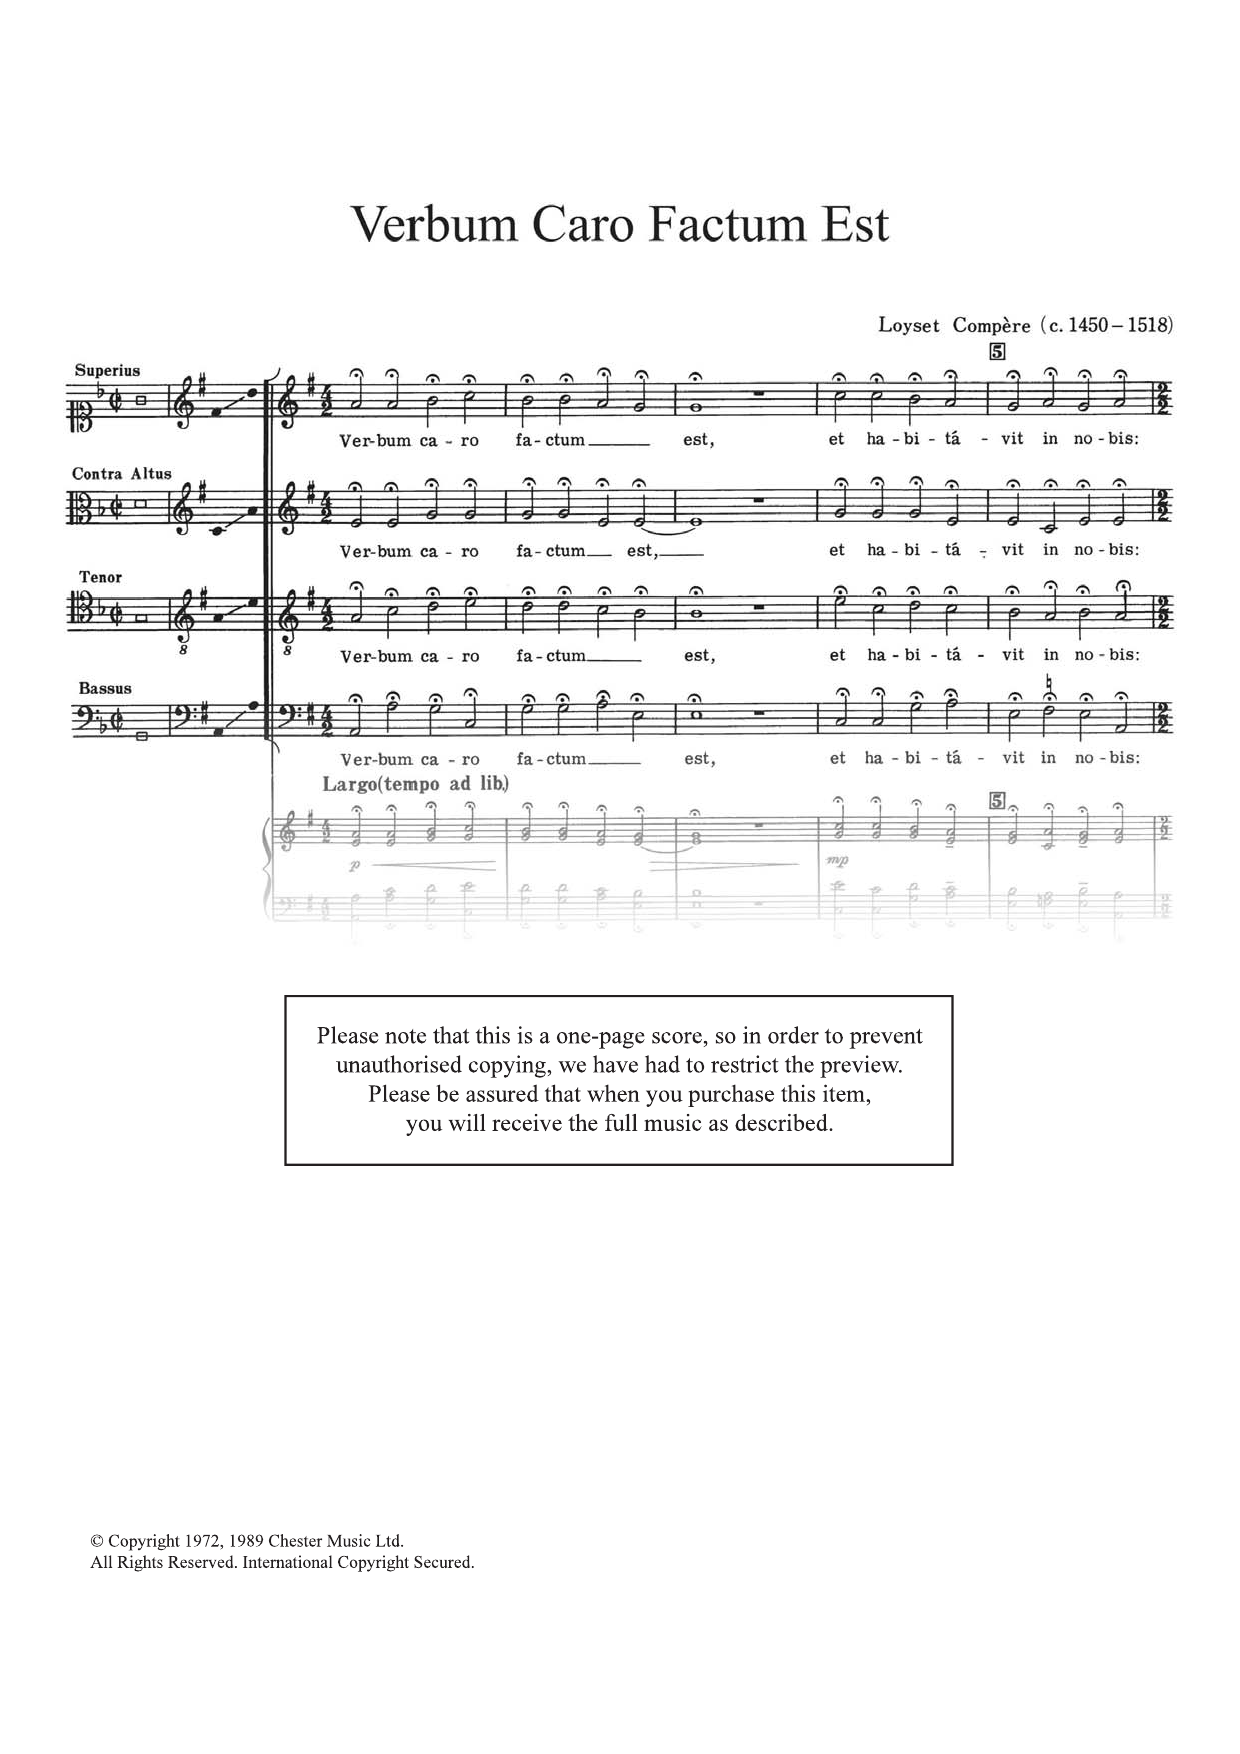 Loyset Compere Verbum Caro Factum Est sheet music notes and chords arranged for SATB Choir